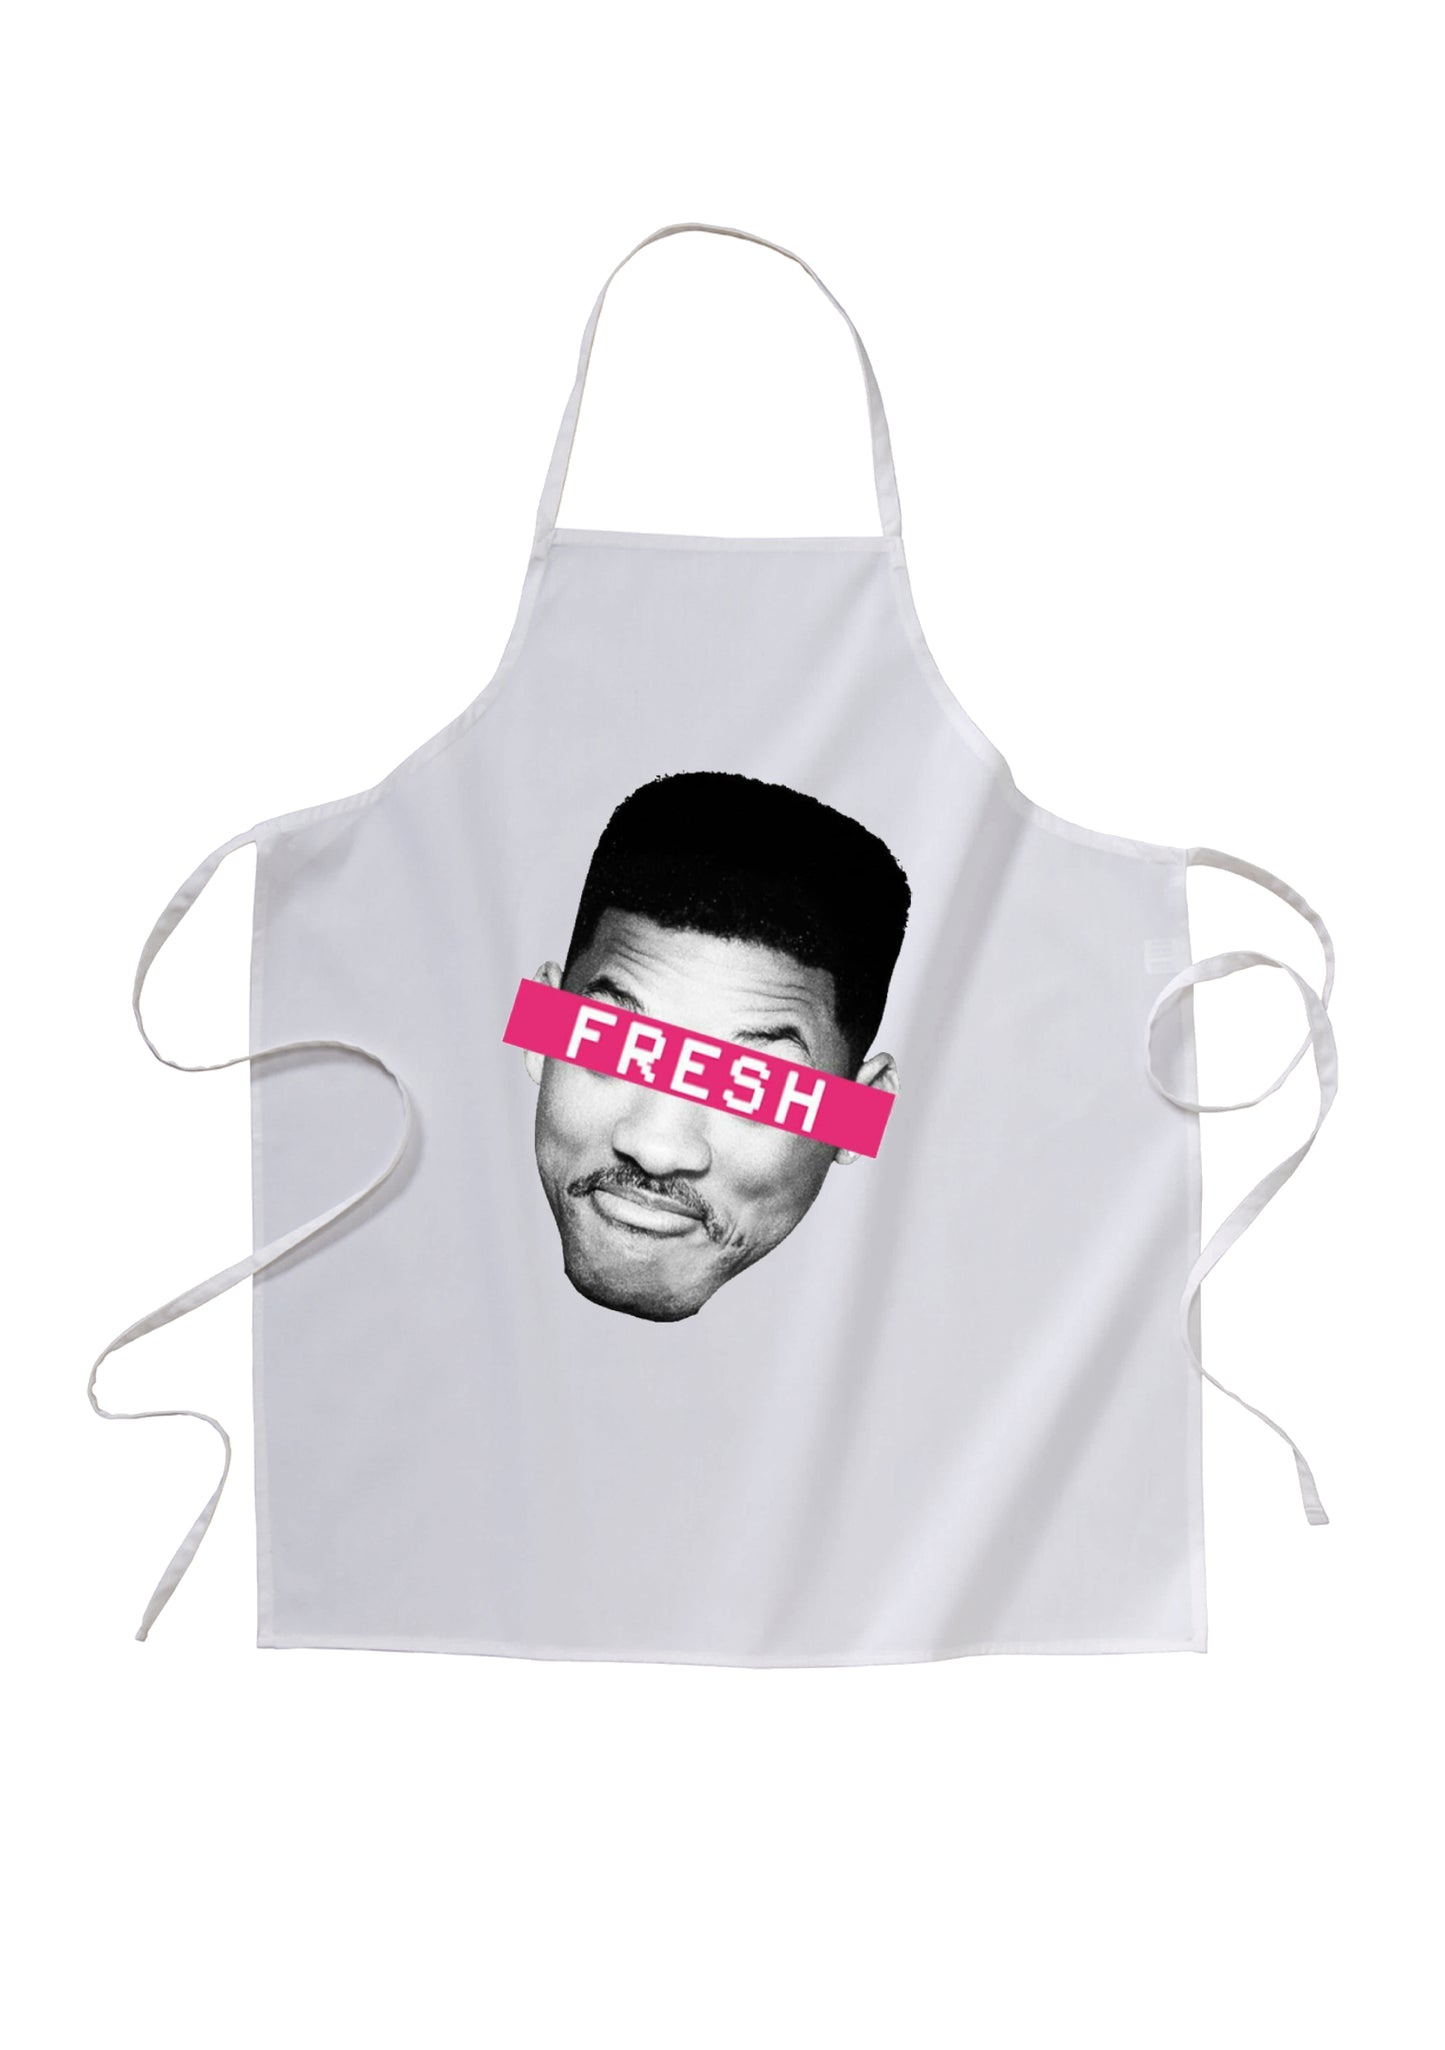 apron - Willy fresh